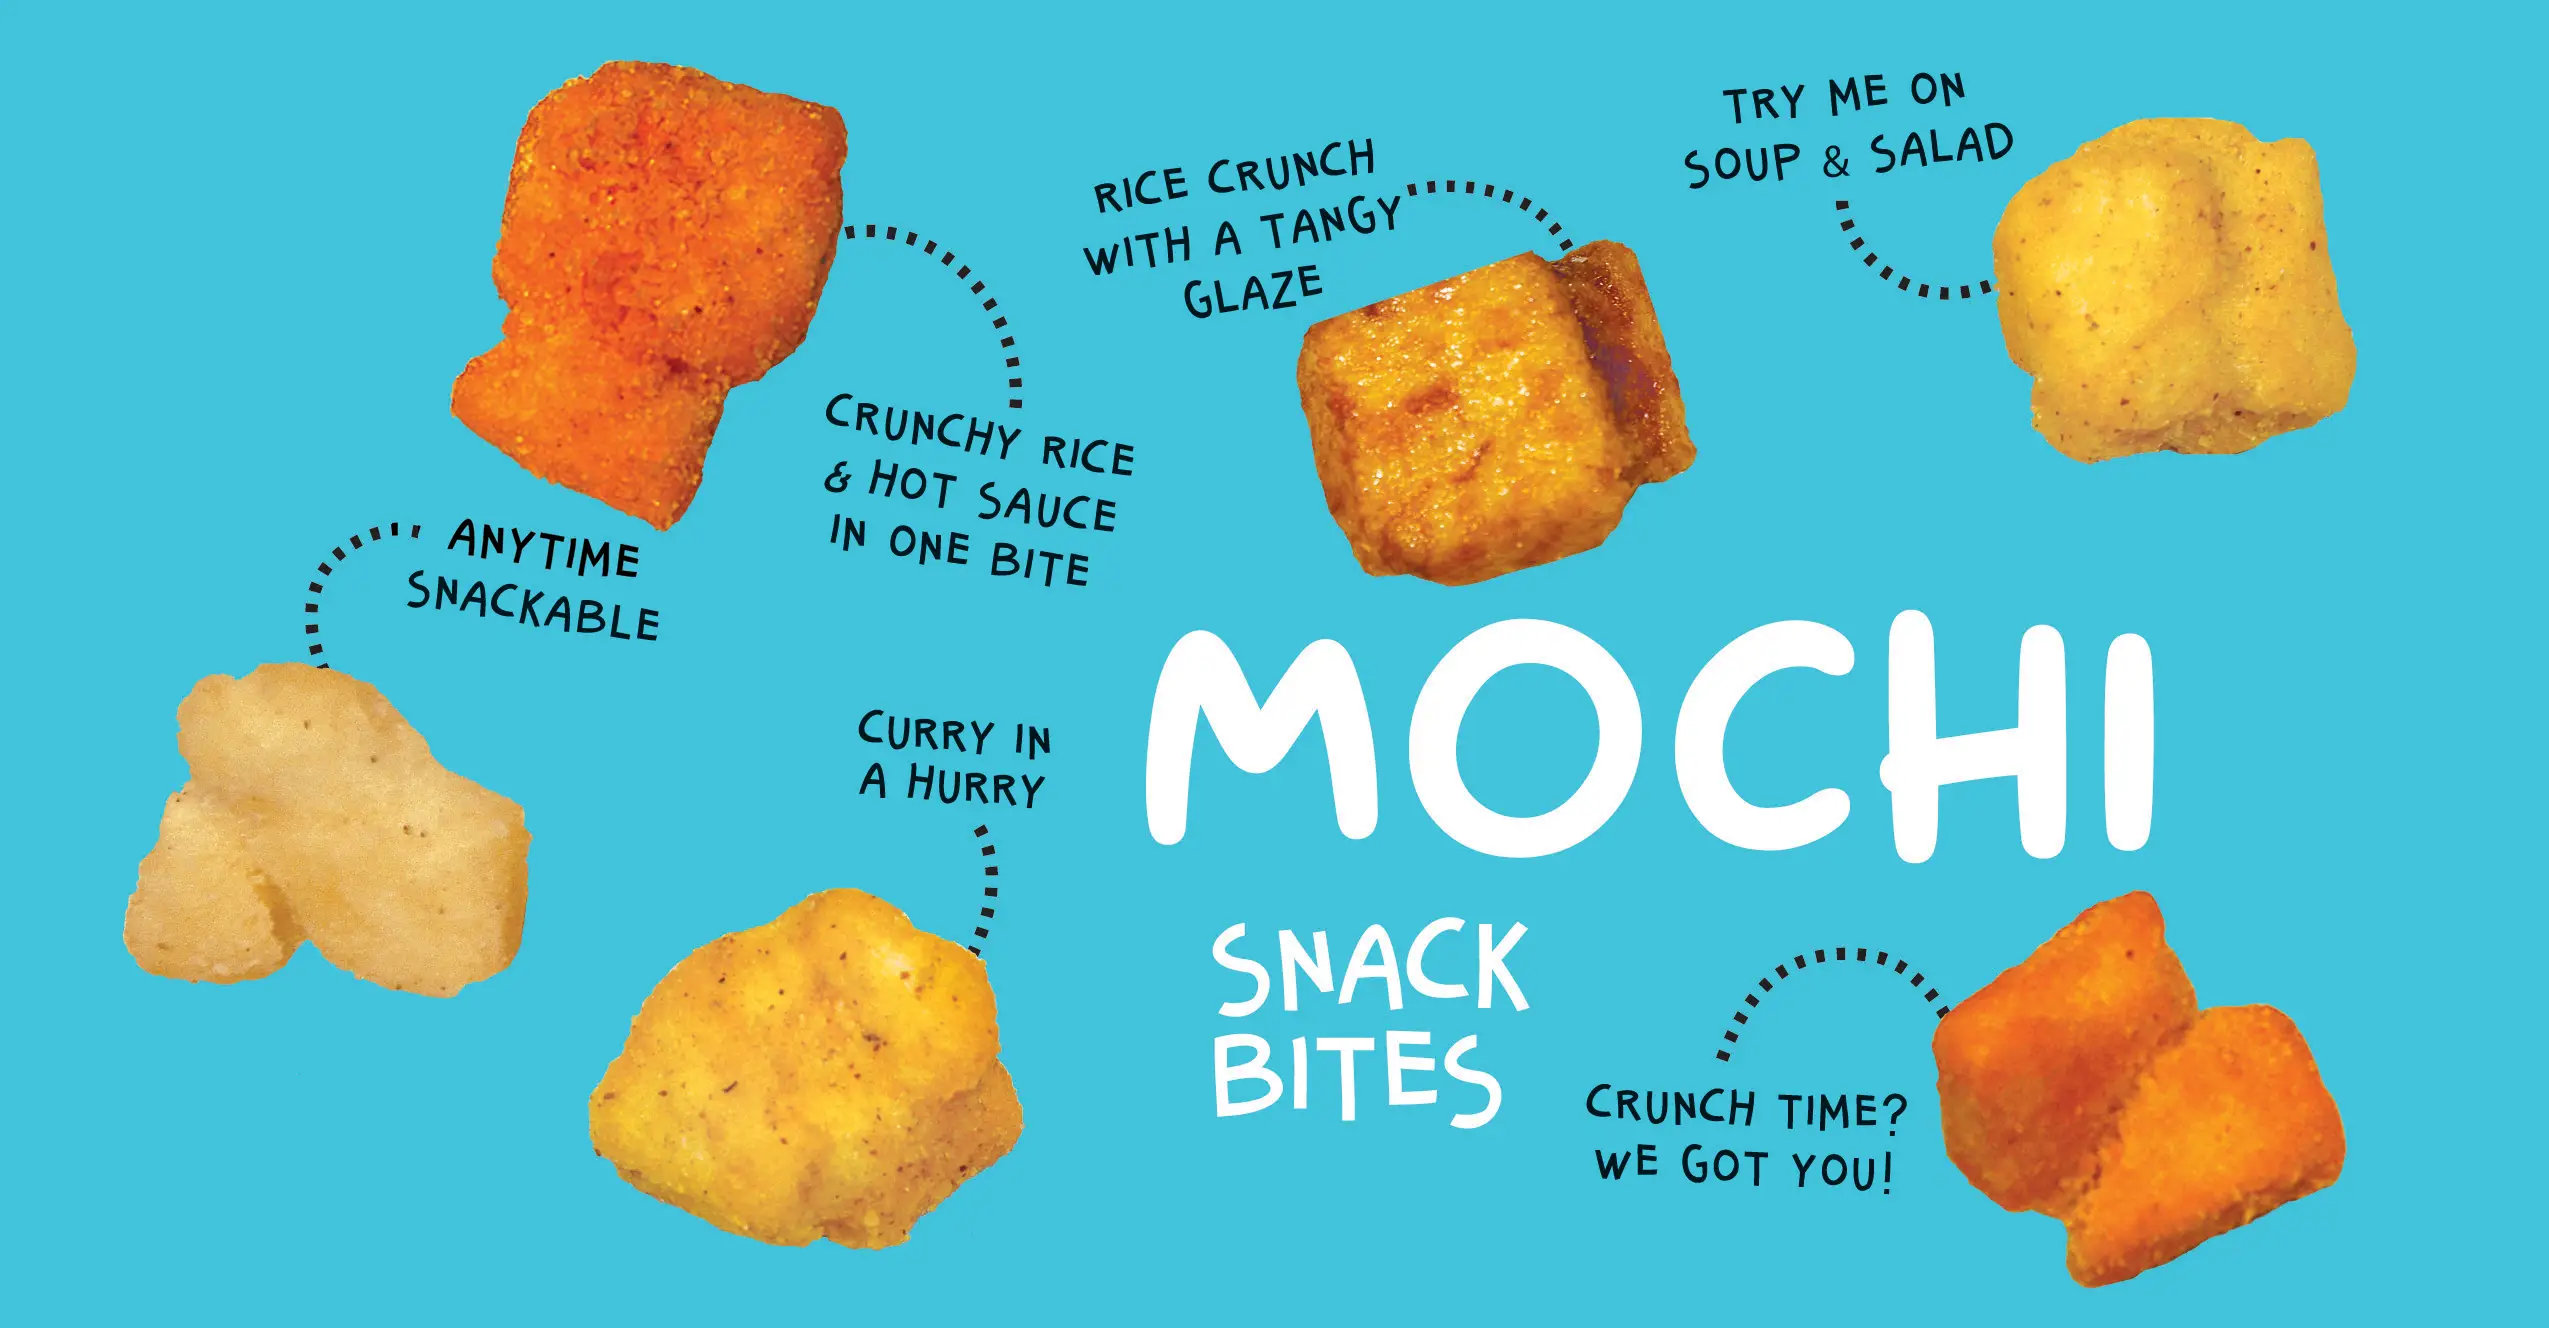 Mochi Snack Bites - Crunchy Rice treats